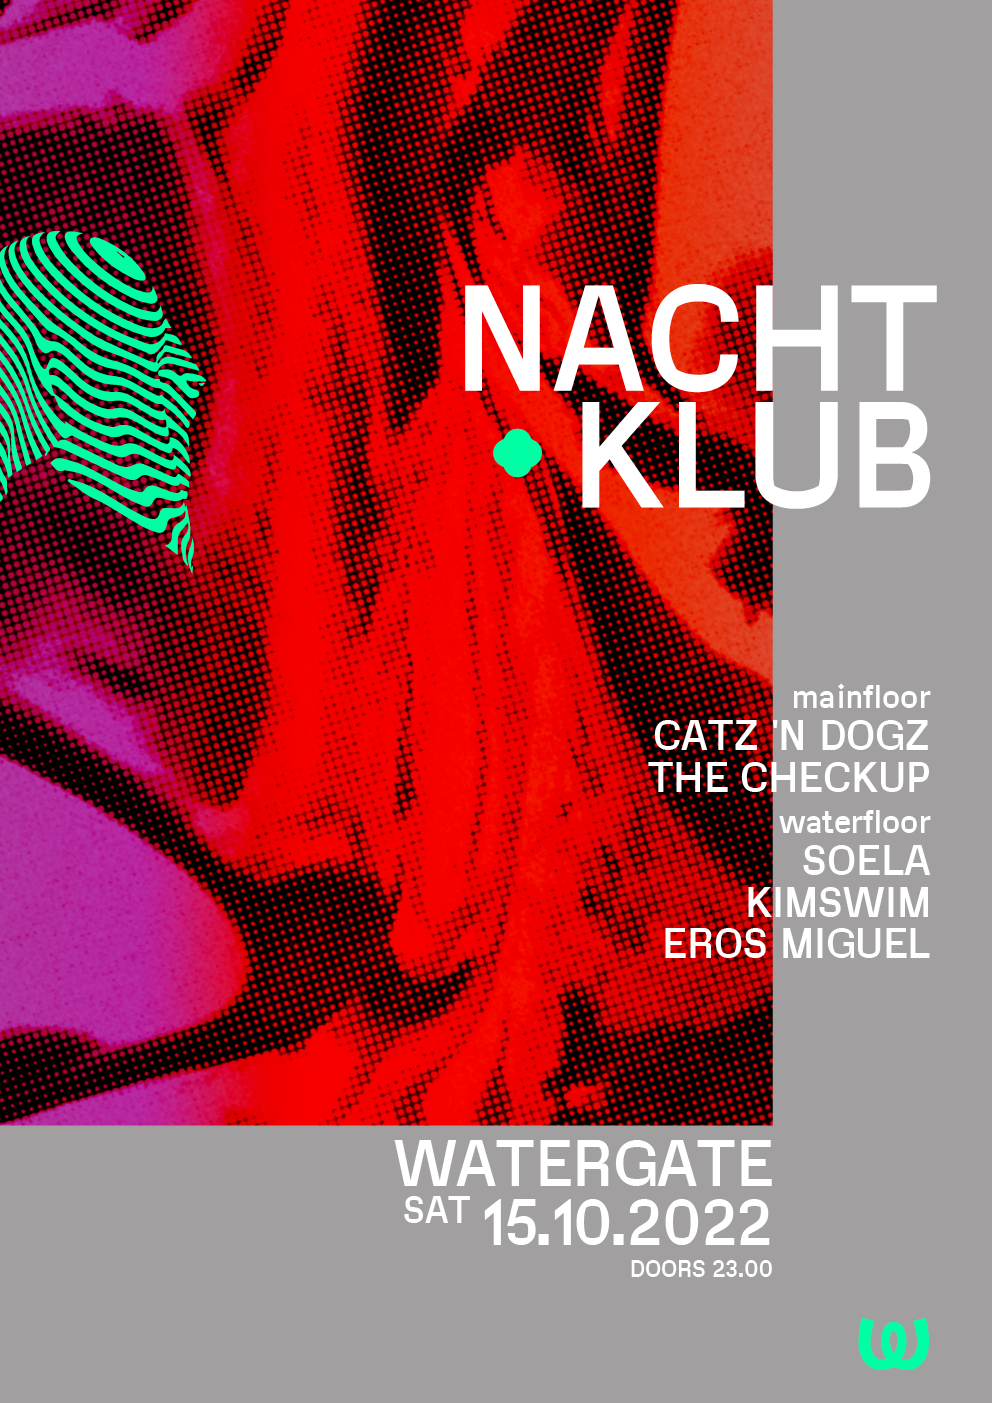 Nachtklub: Catz 'N Dogz, The Checkup, Soela, Kimswim, Eros Miguel - Flyer front